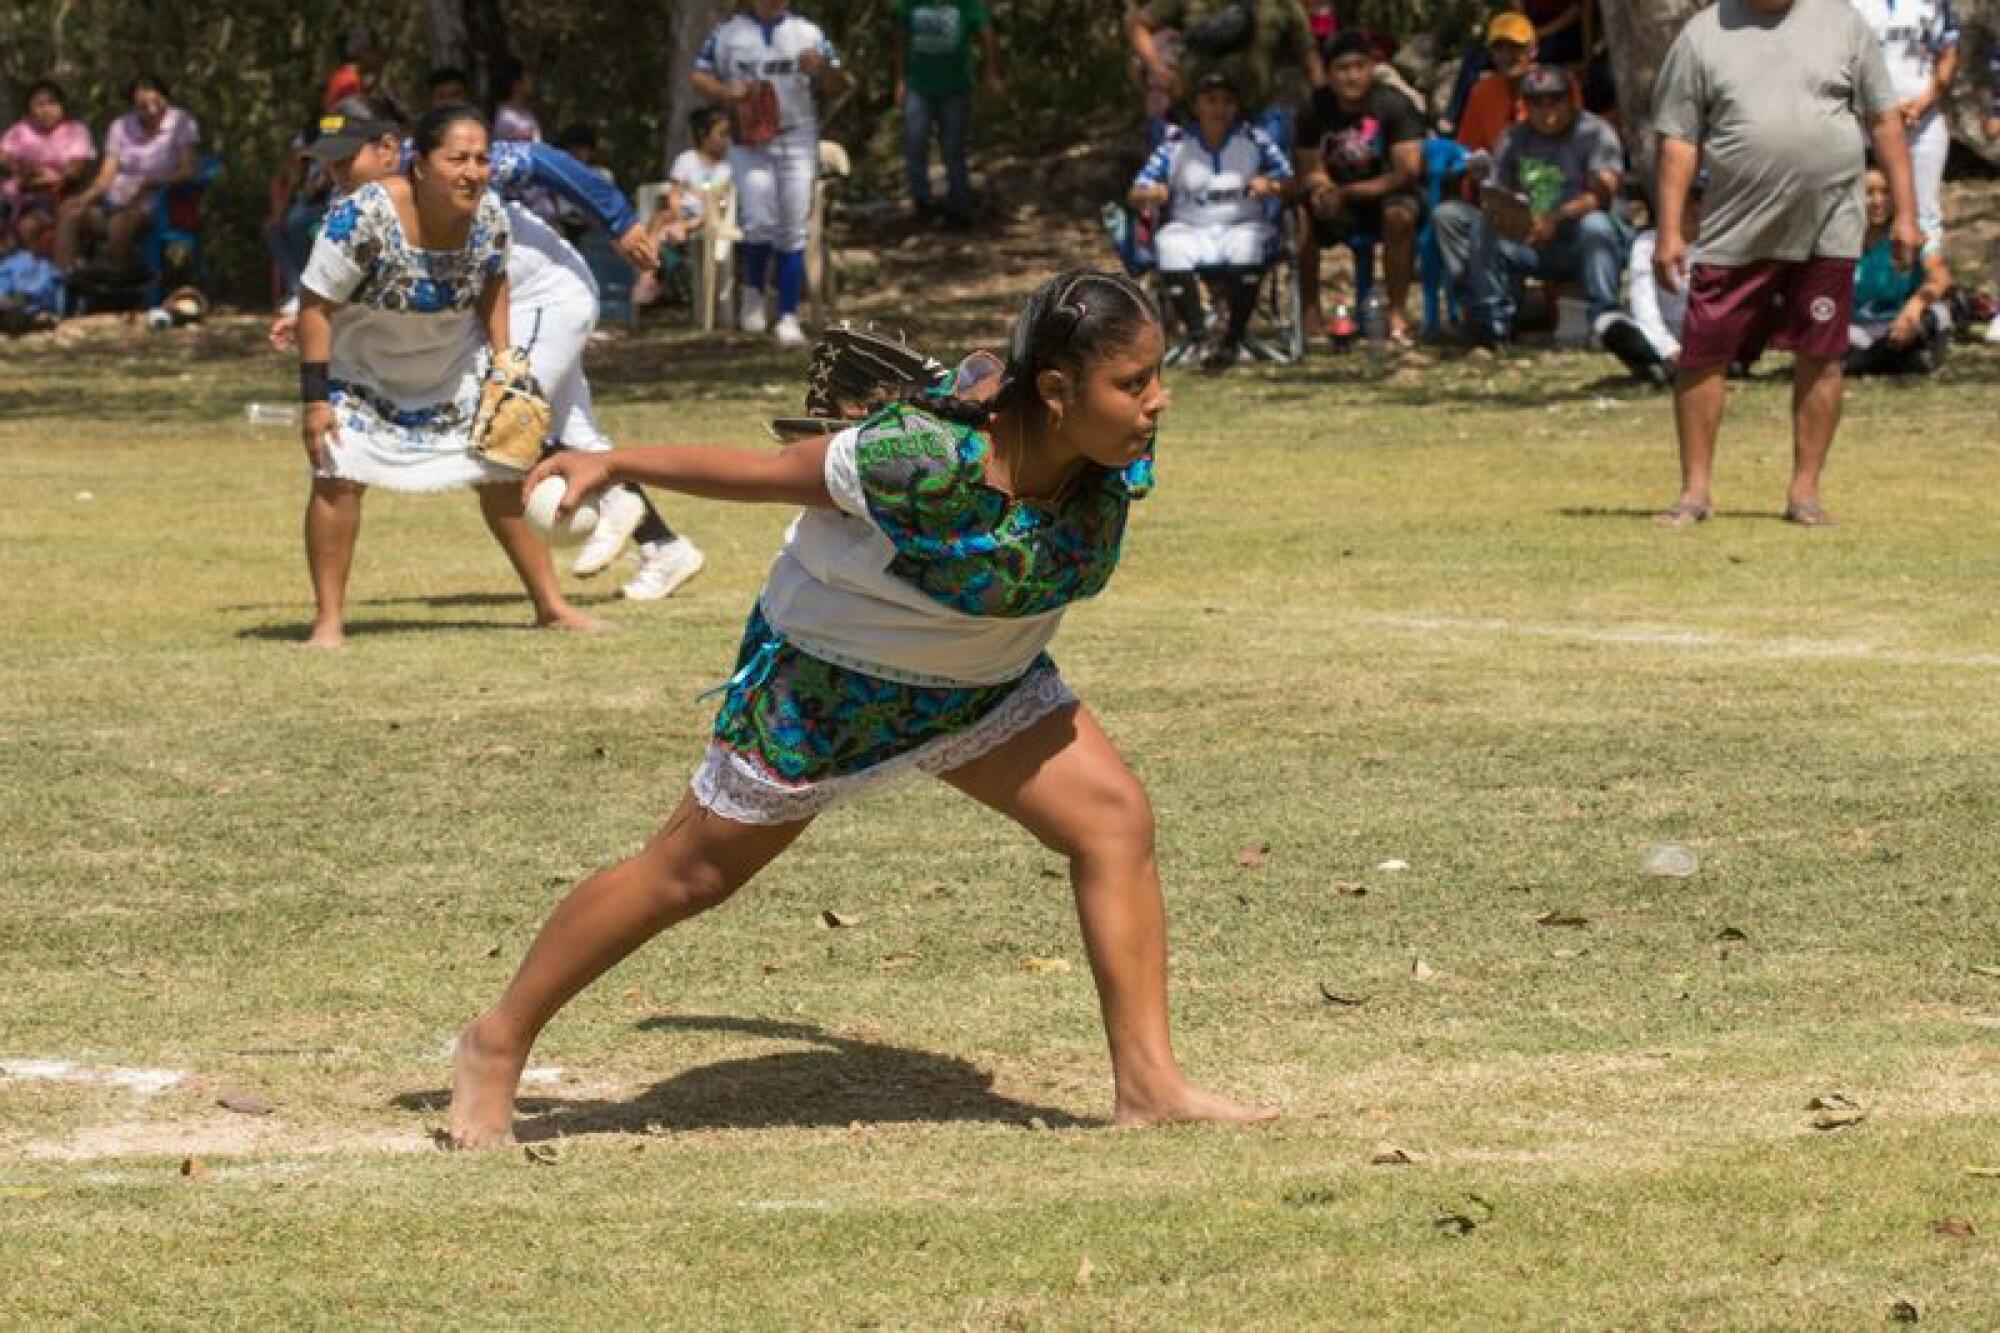 Las Amazonas de Yaxunah, shown wearing indigenous clothing, play a softball game while actor Yalitza Aparicio watches